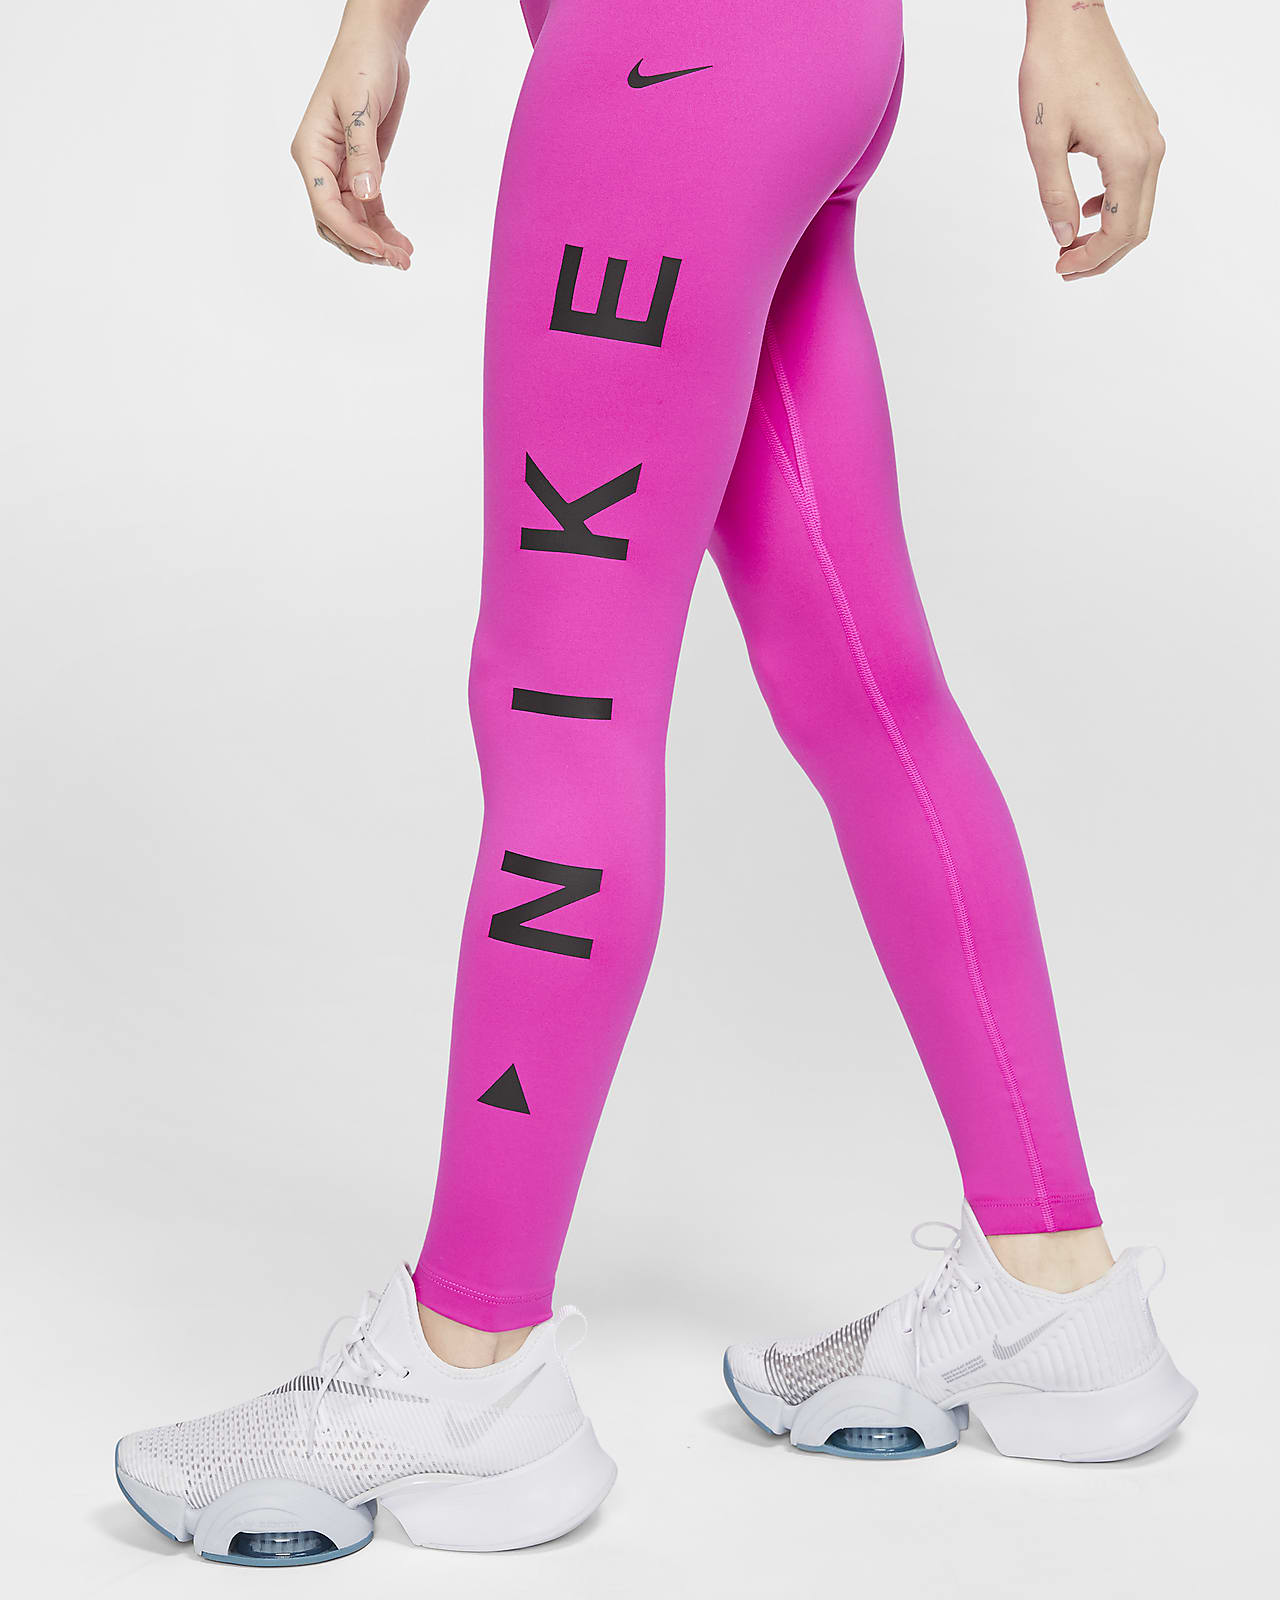 fire pink nike leggings